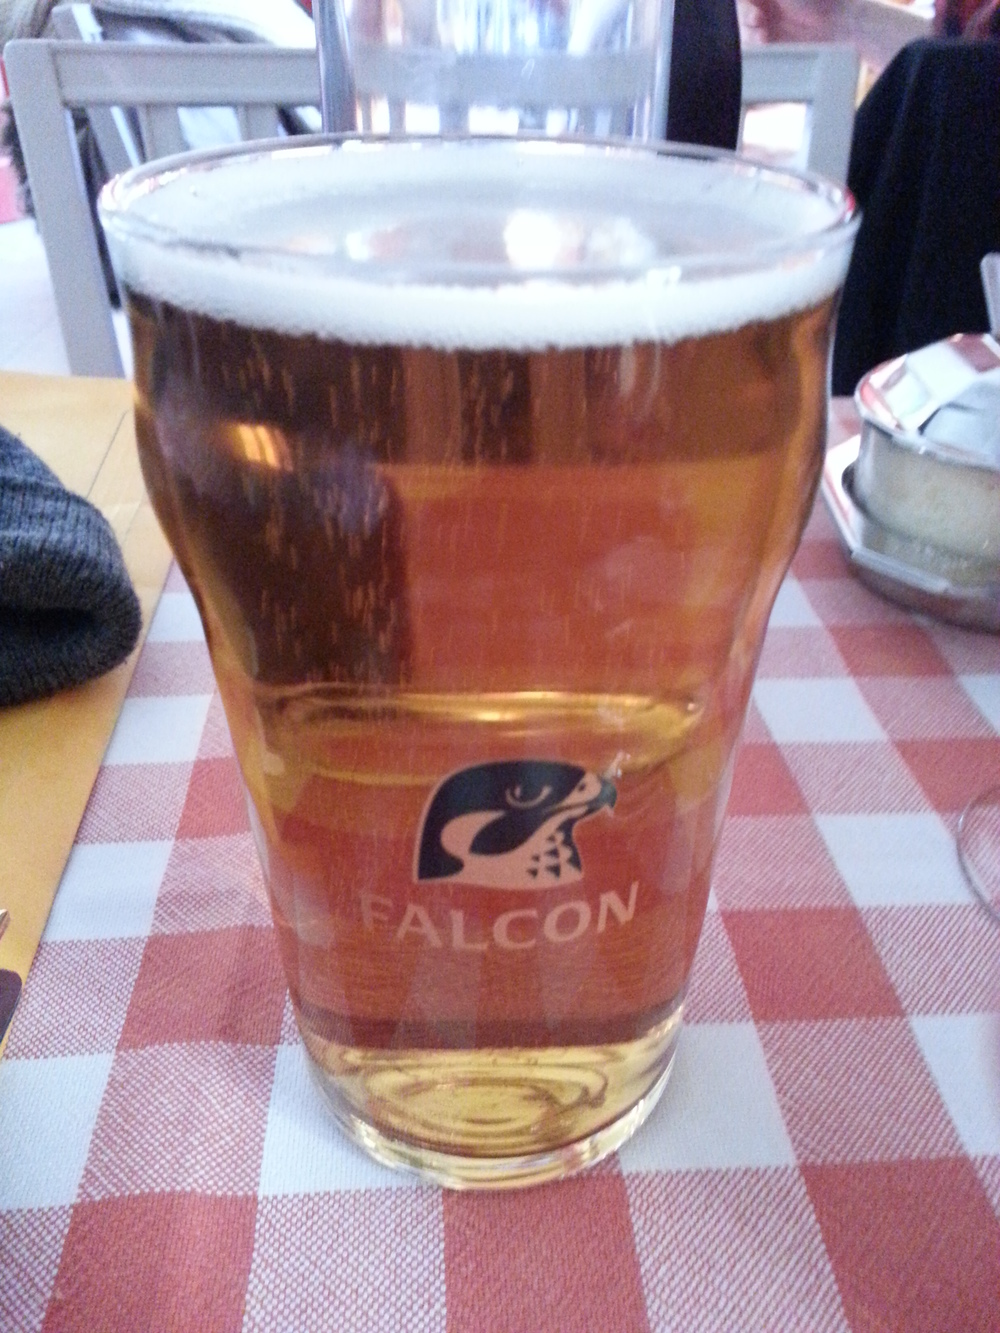  Falcon, my favorite Swedish beer 